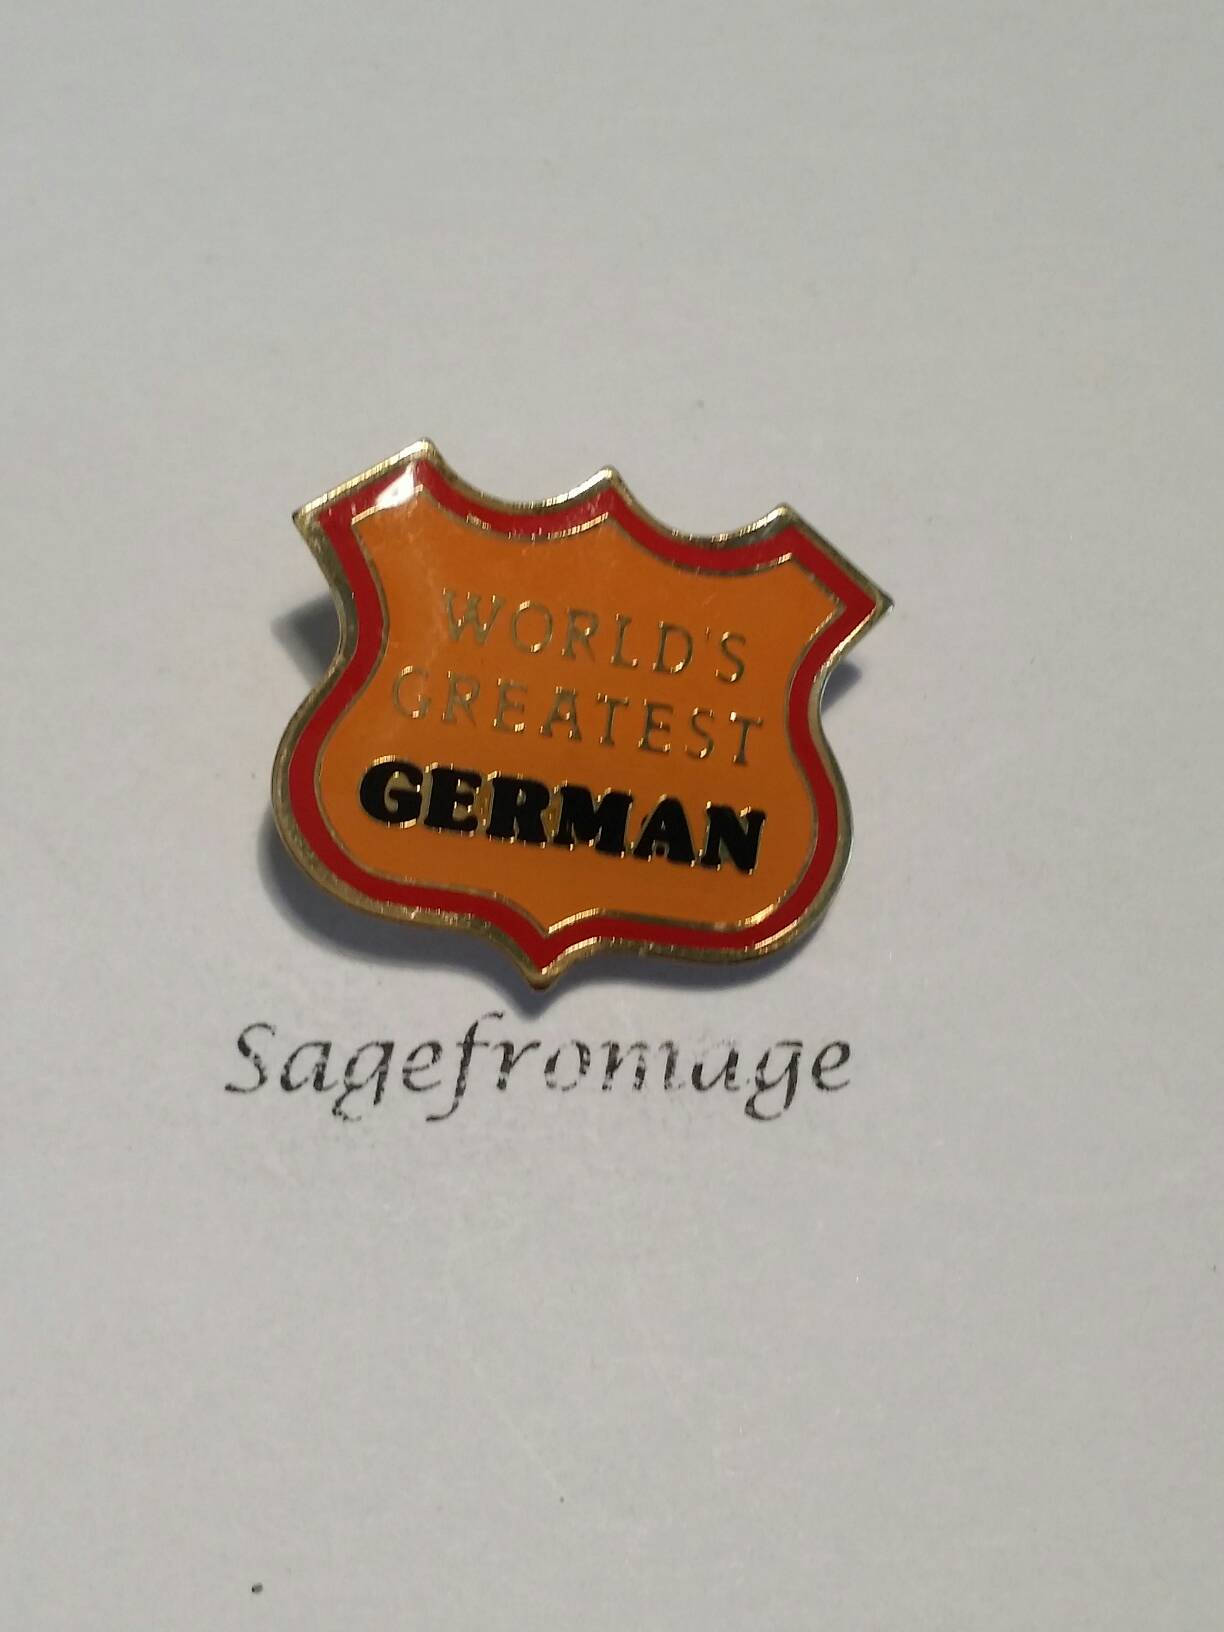 world greatest german pin